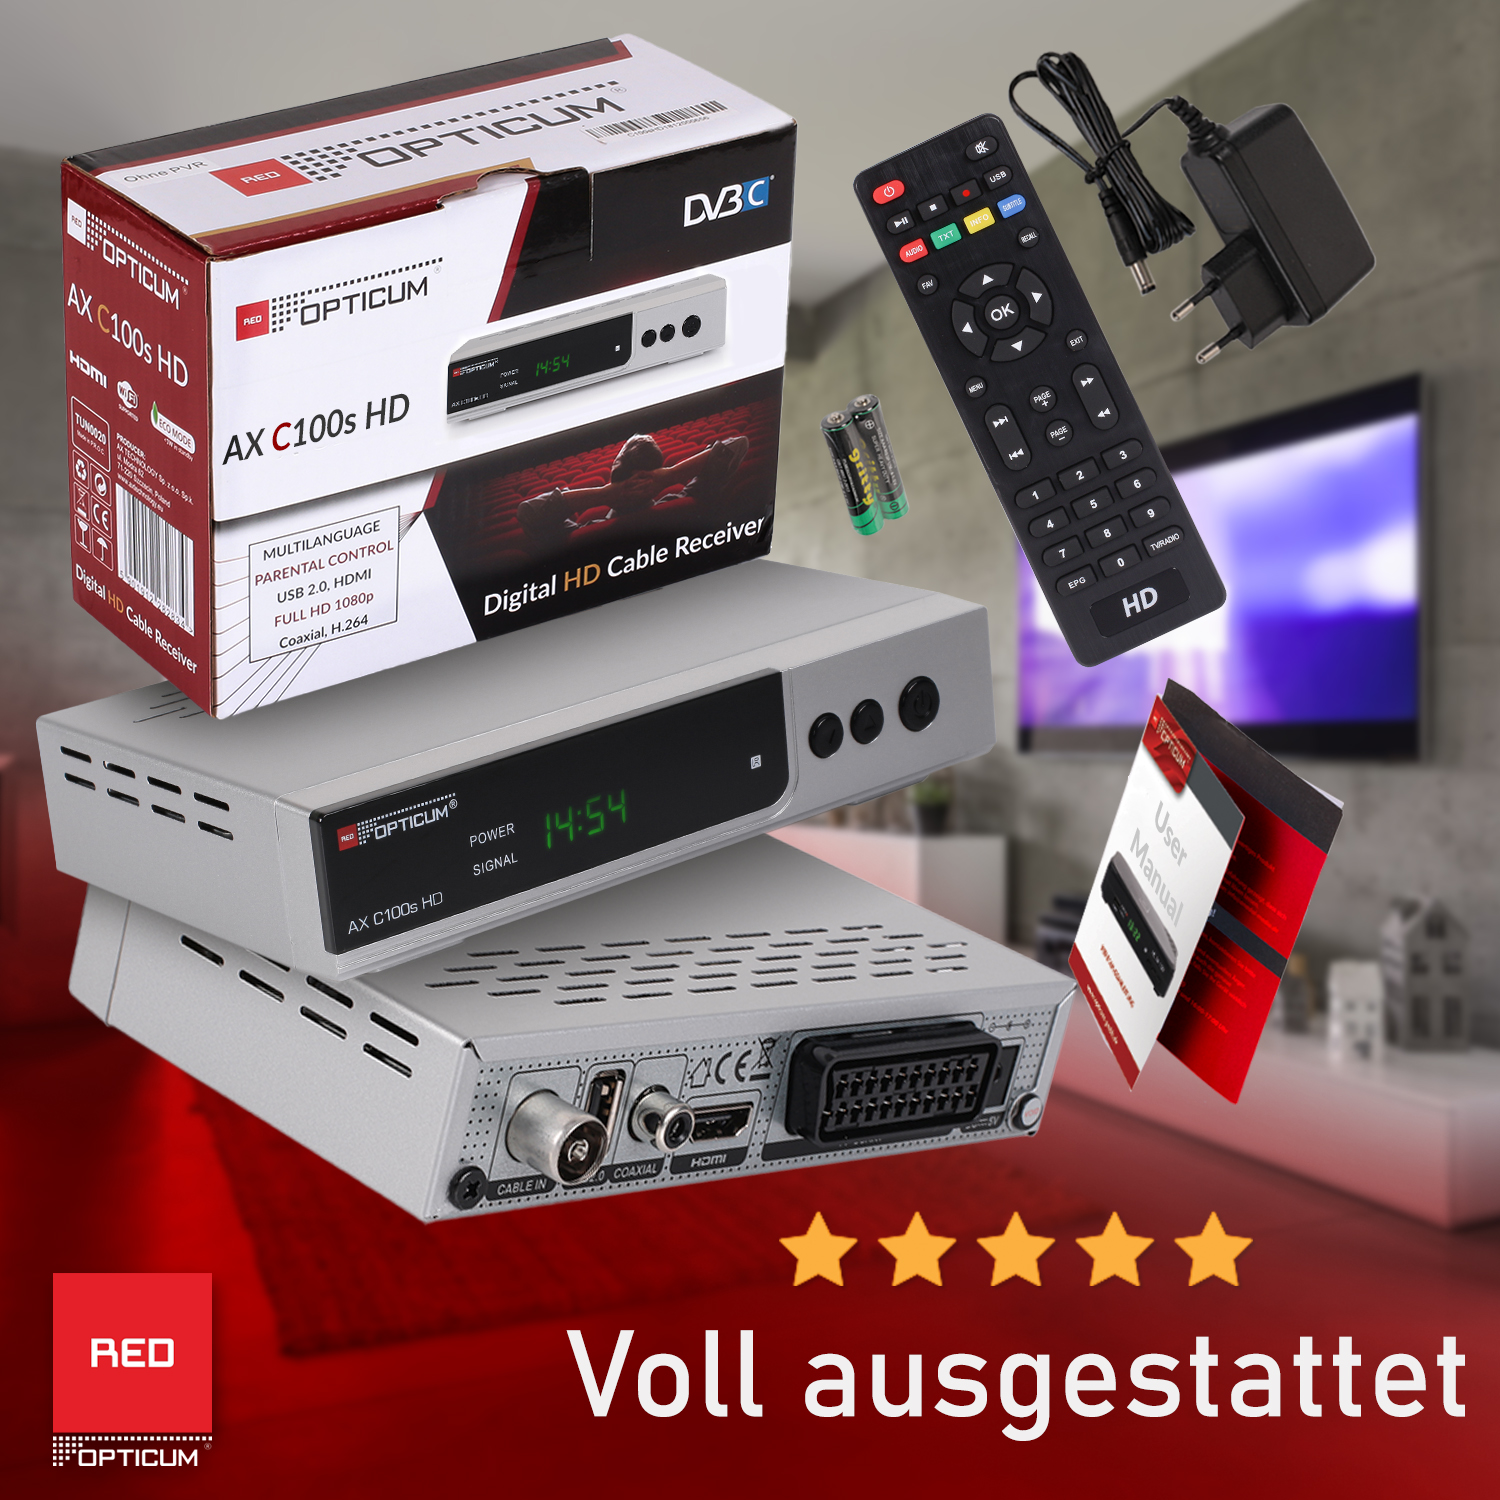 RED OPTICUM AX C100s HD Digitaler DVB-C (HDTV, DVB-C2, silber) DVB-C, Kabel-Receiver PVR-Funktion, Kabelreceiver Receiver I HD-EPG-HDMI-USB-SCART PVR-Aufnahmefunktion mit